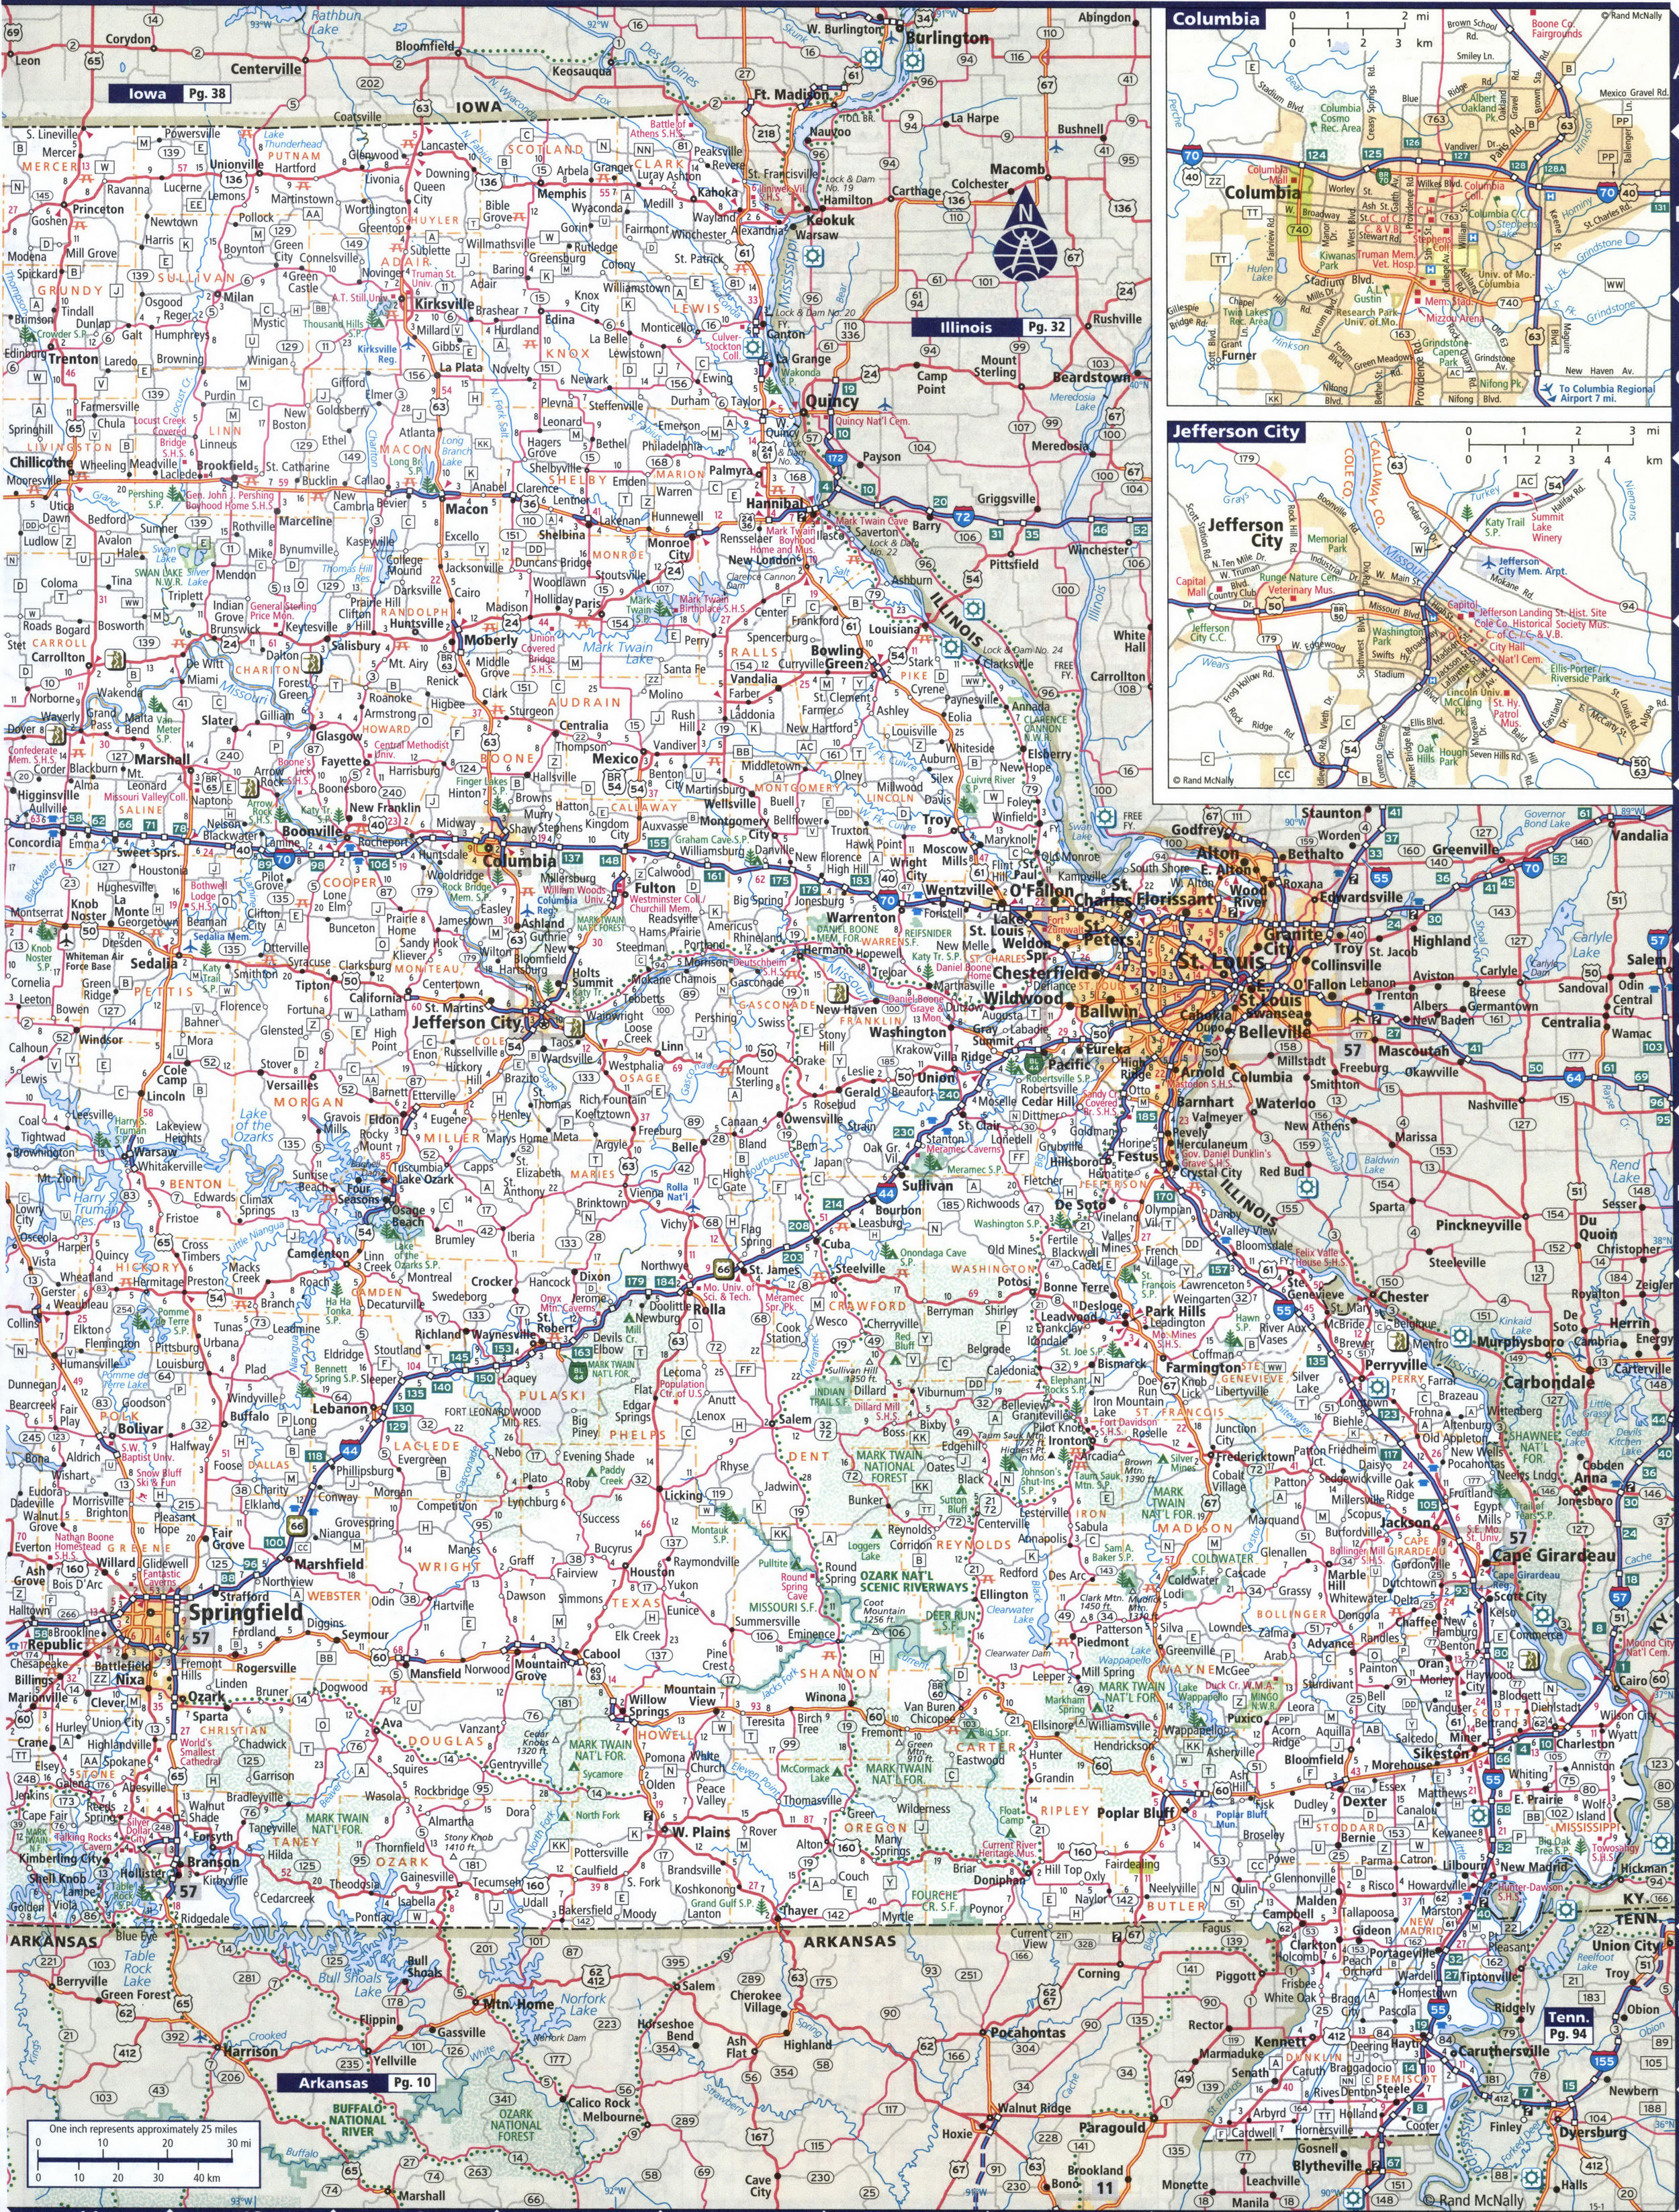 Map of eastern Missouri